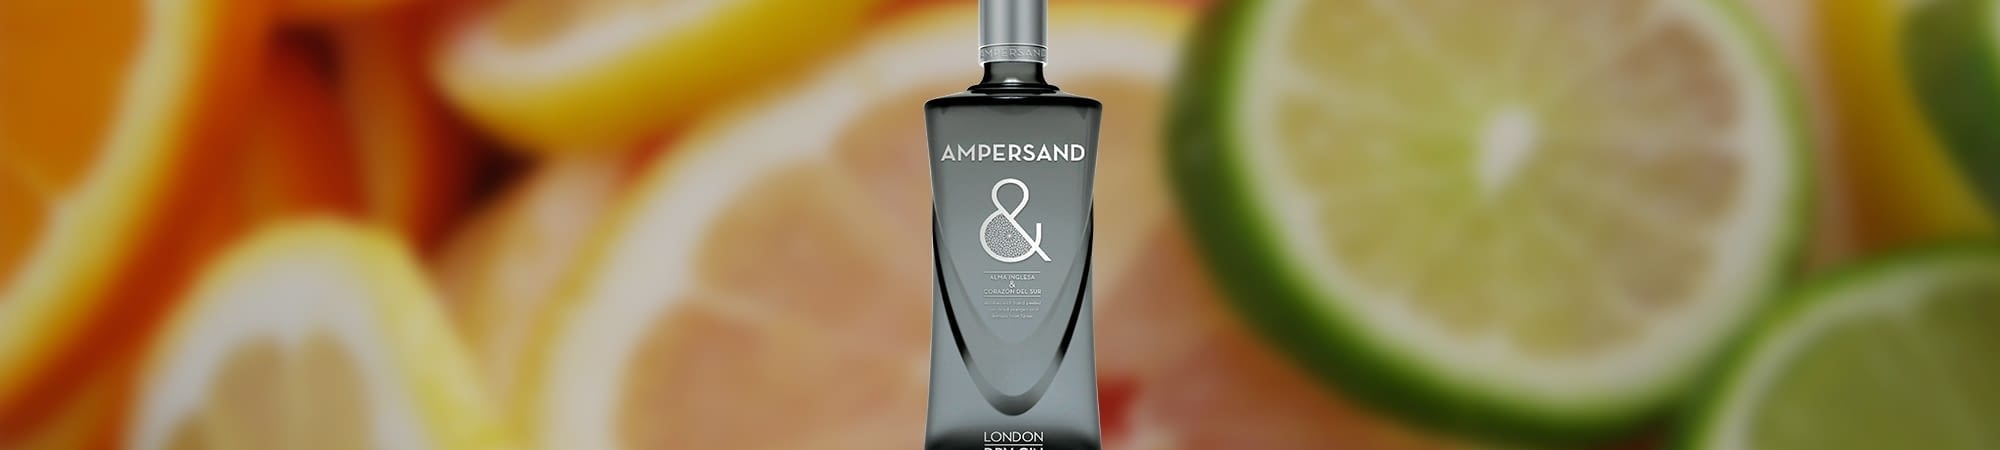 Gin Ampersand